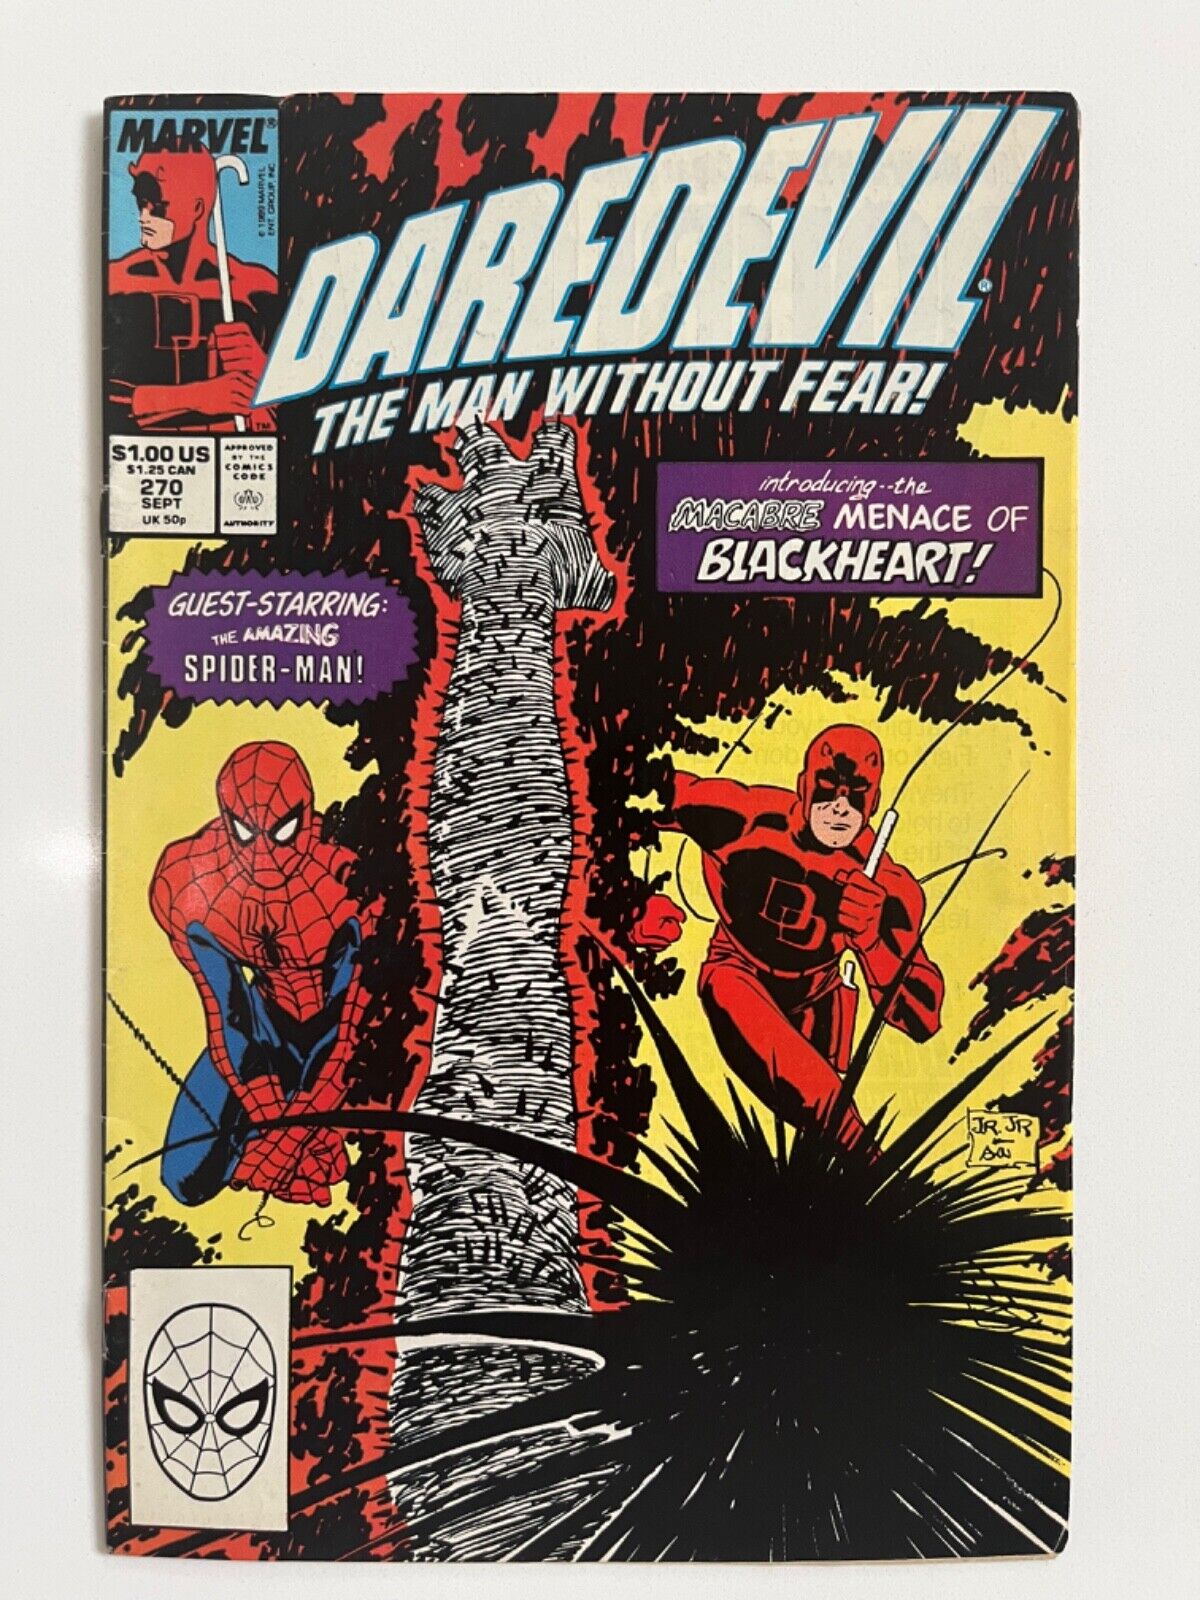 Marvel Daredevil #270 • Marvel 1989 • 1st appearance of Blackheart • Copper Age